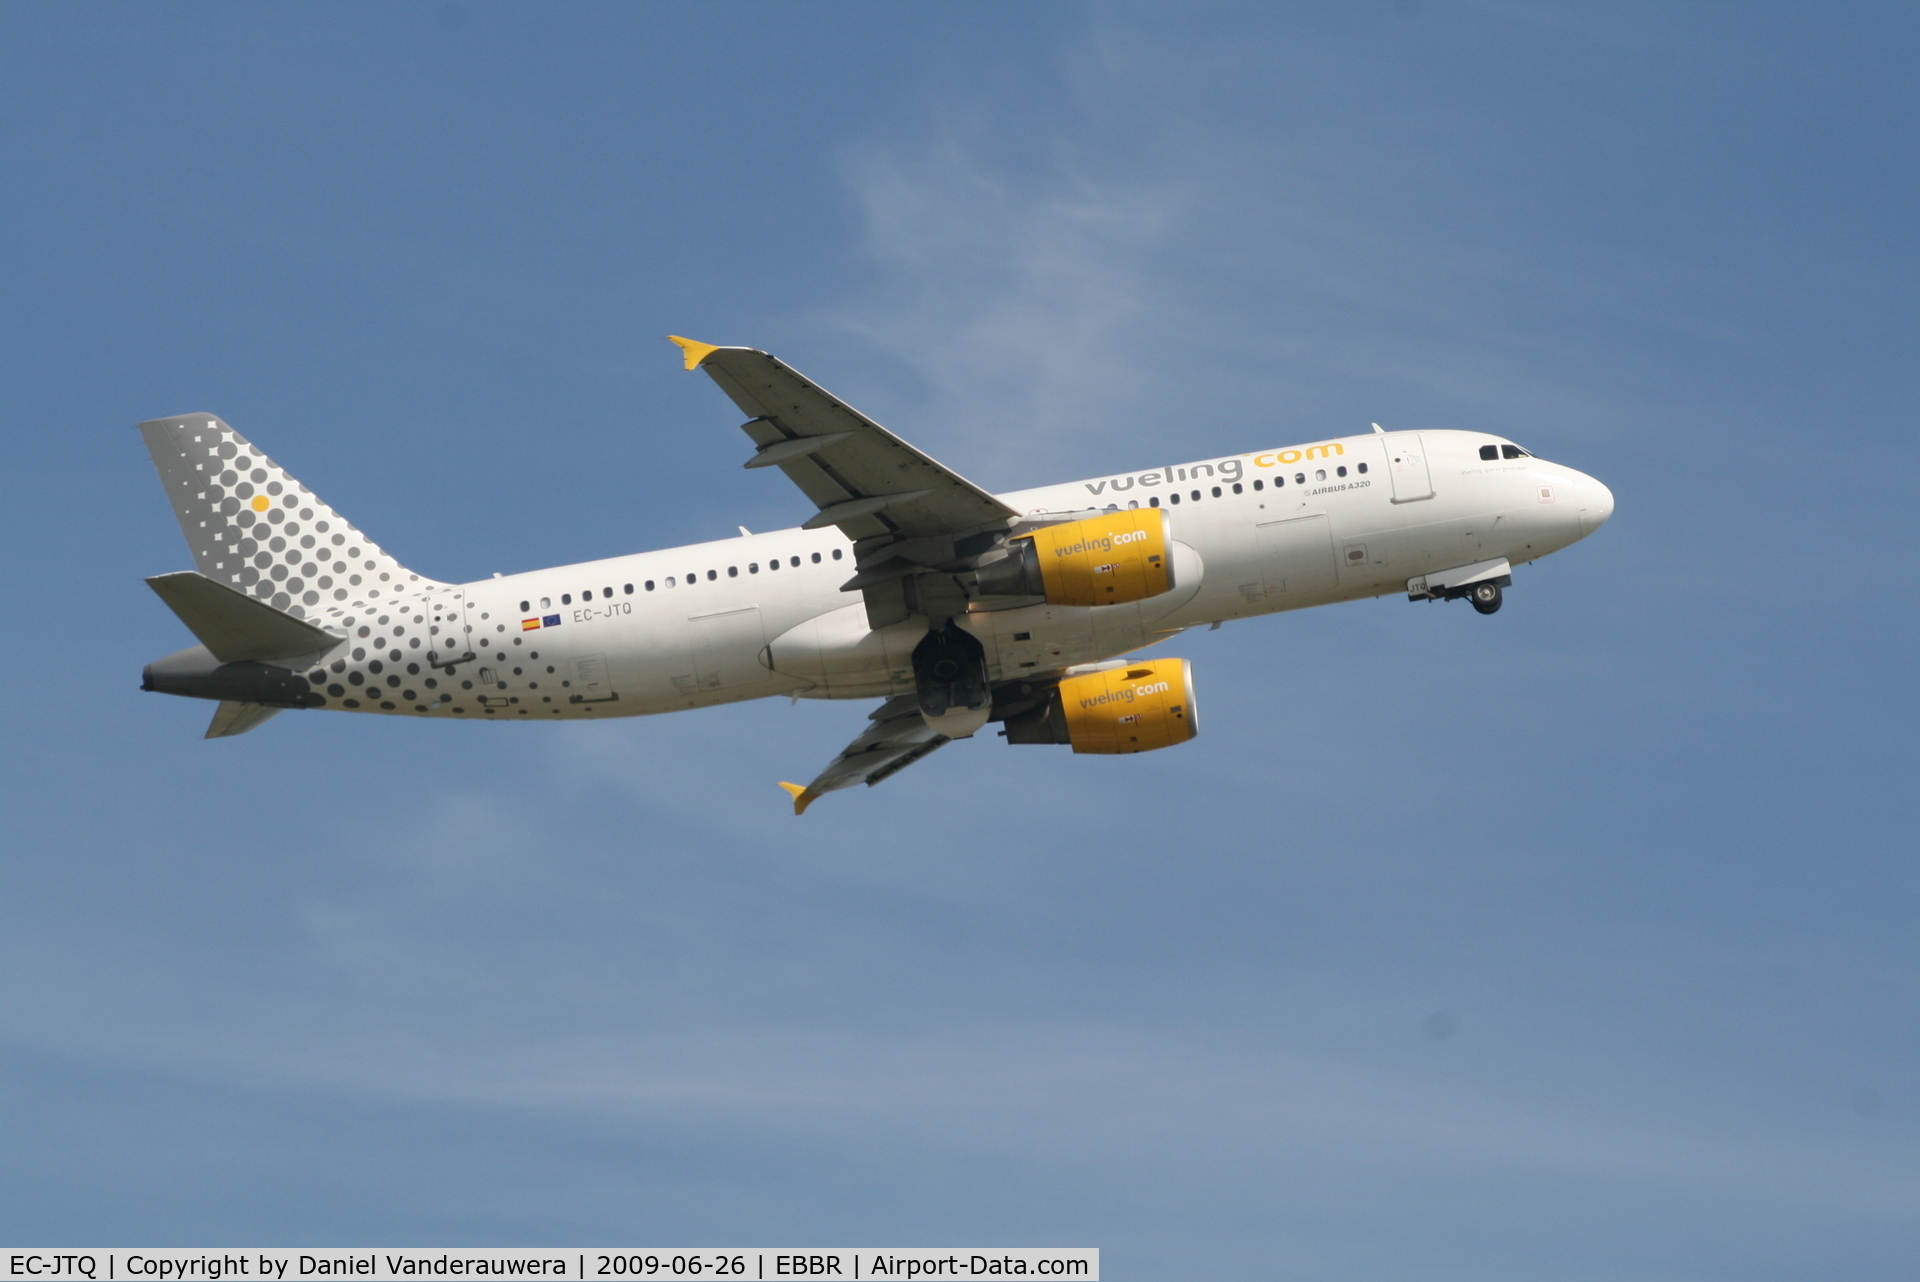 EC-JTQ, 2006 Airbus A320-214 C/N 2794, Flight VY5211 is taking off from rwy 07R